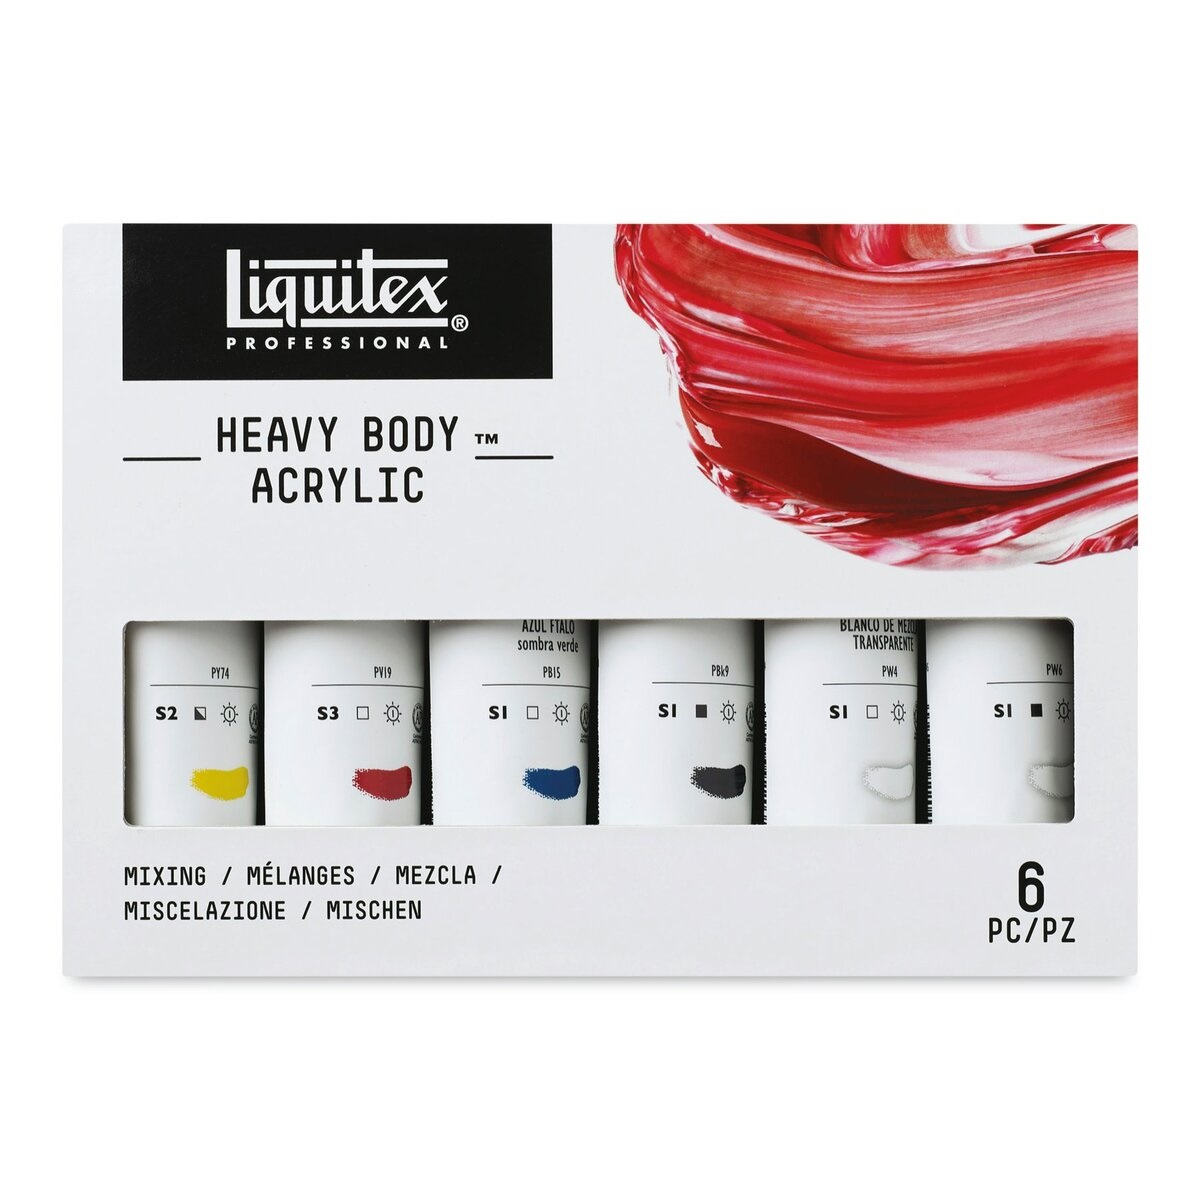 Liquitex Professional Heavy Body Acrylic Paint, 50,000+ Art Supplies